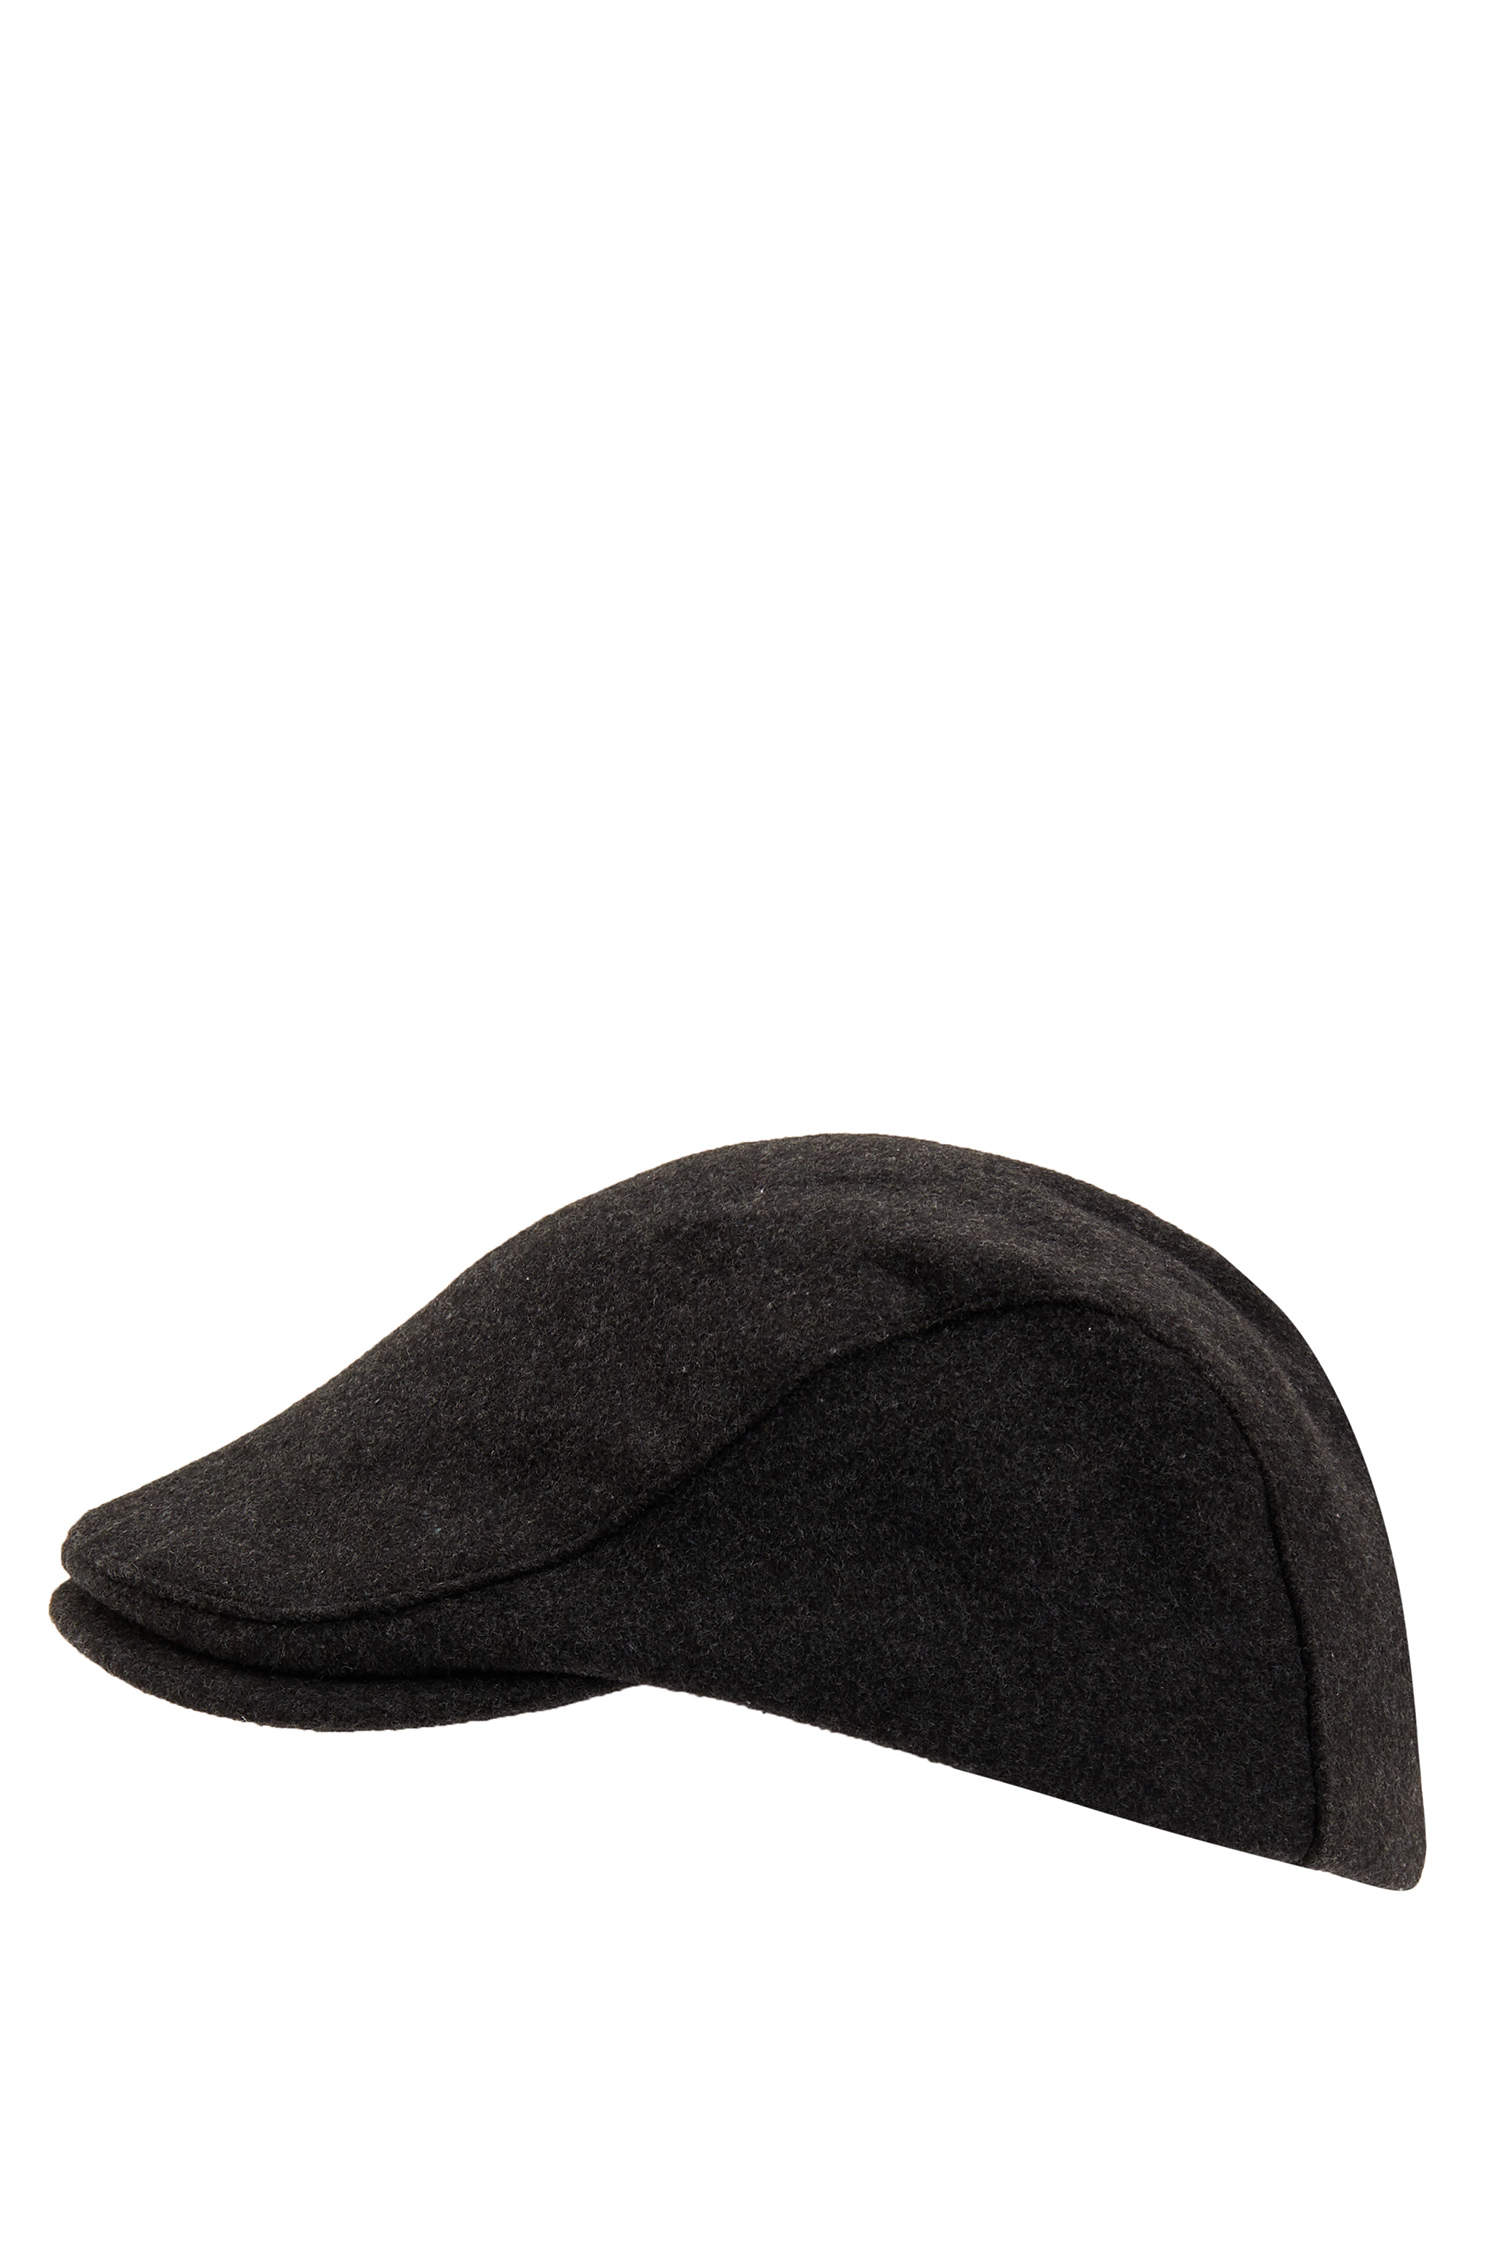 Defacto Kışlık Kasket Şapka. 2